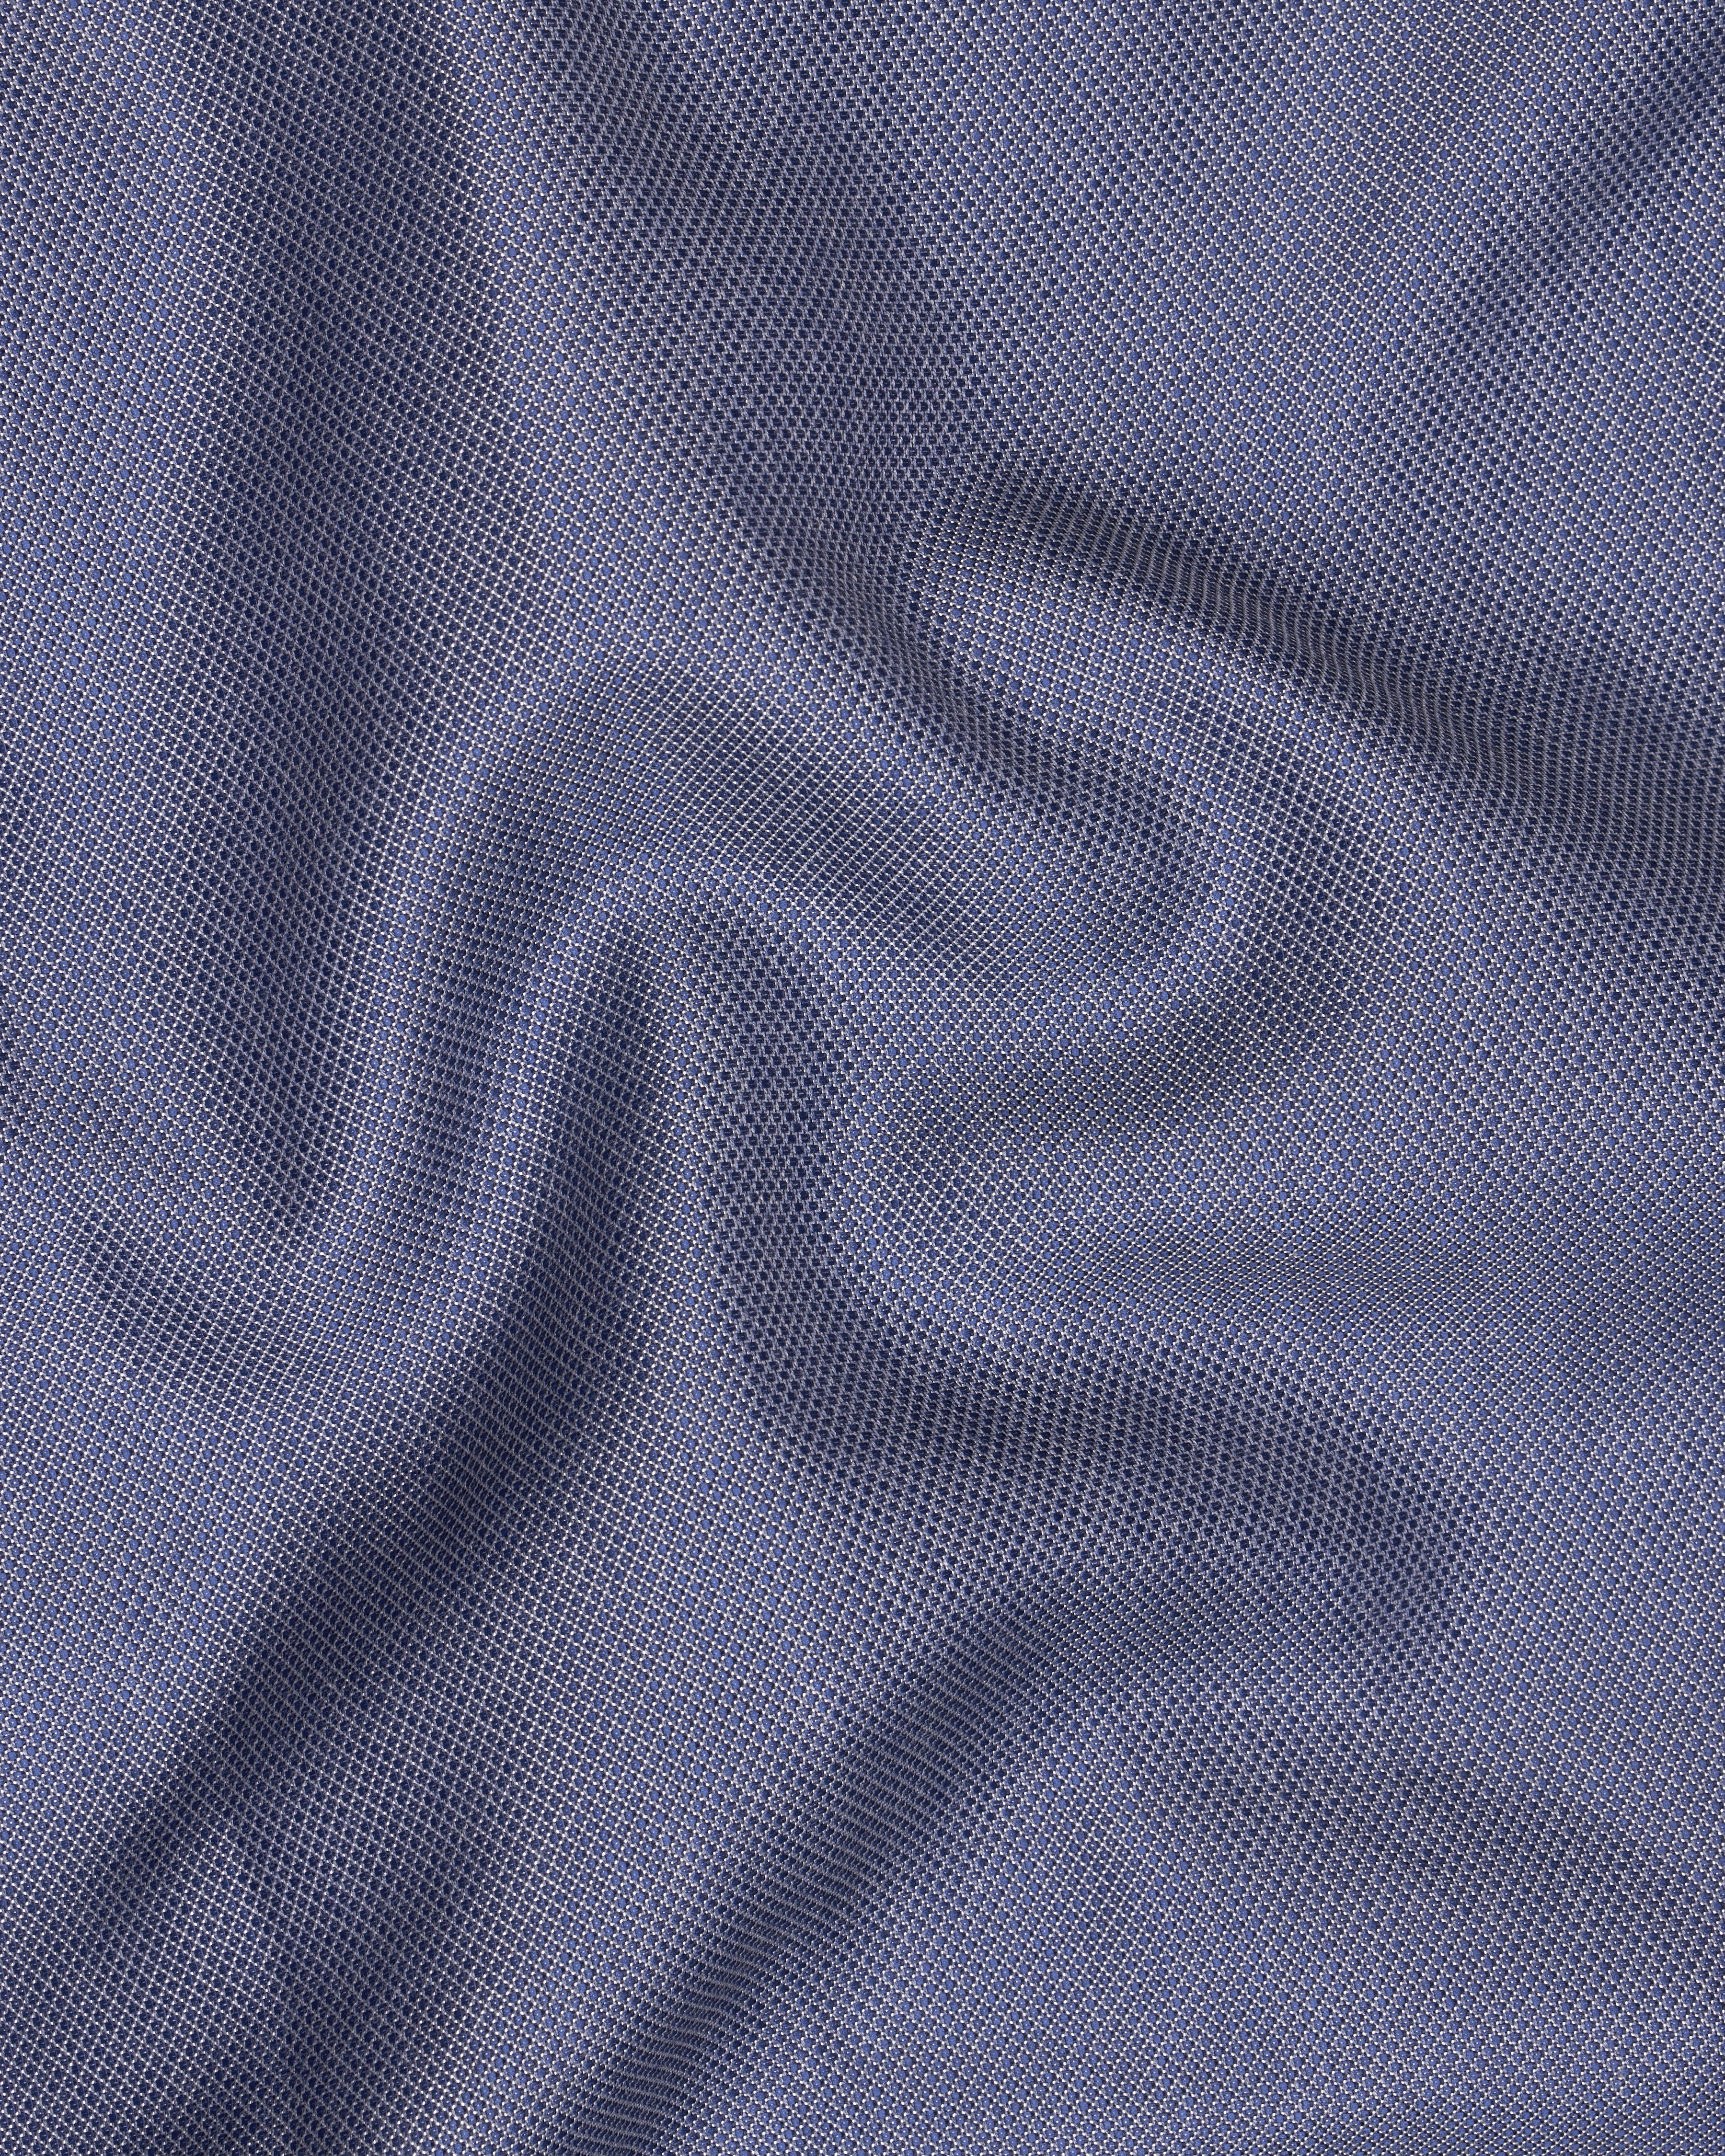 Dolphin Blue Textured Waistcoat V2613-36, V2613-38, V2613-40, V2613-42, V2613-44, V2613-46, V2613-48, V2613-50, V2613-52, V2613-54, V2613-56, V2613-58, V2613-60